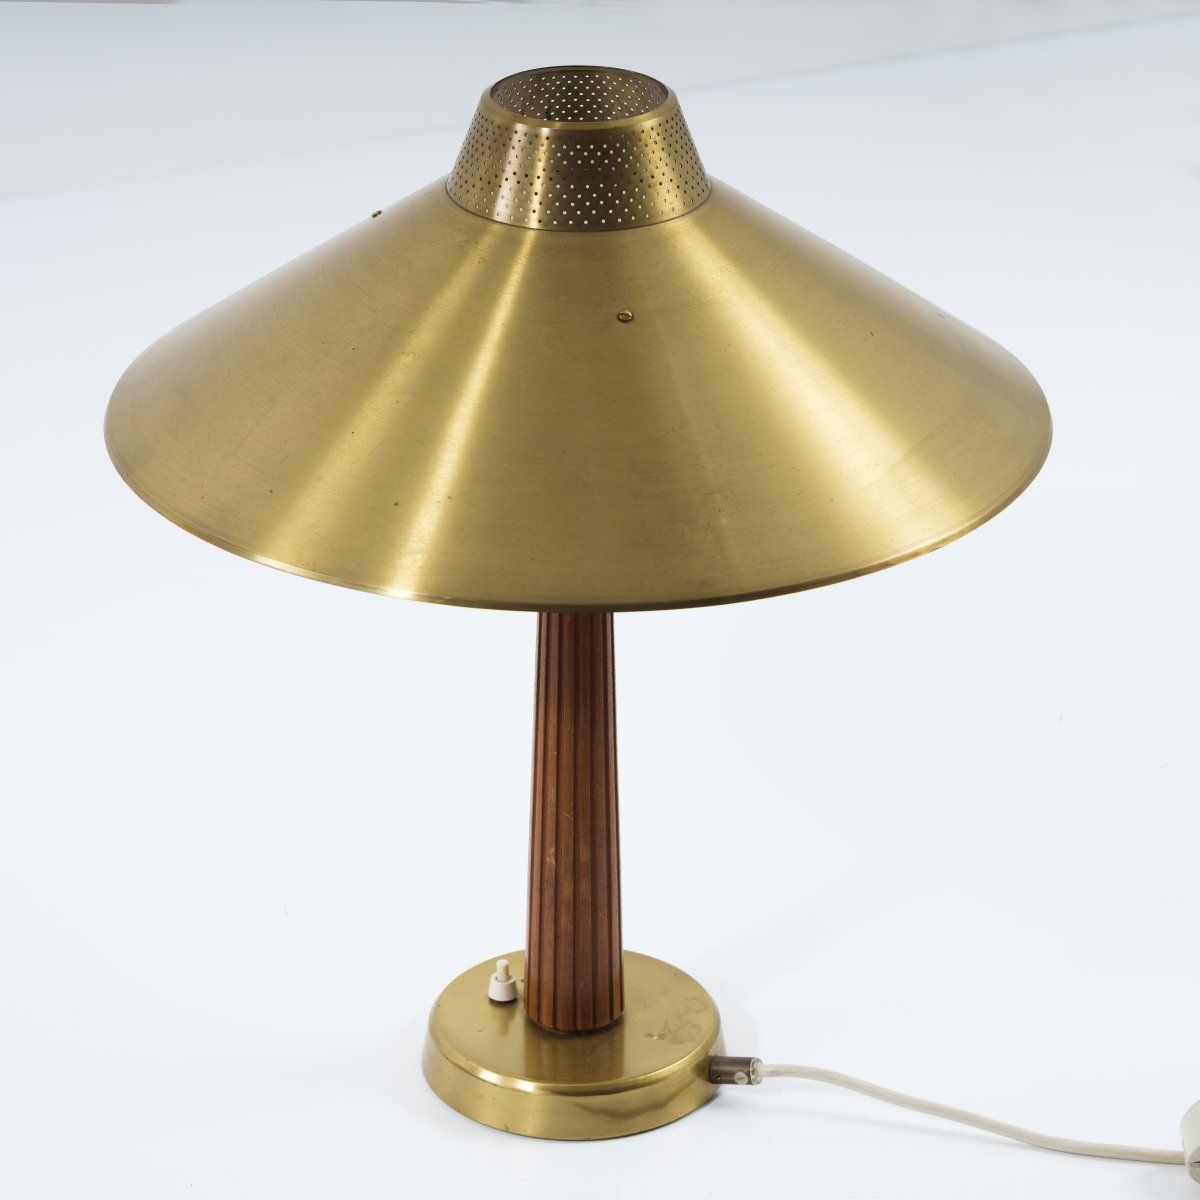 Null Hans Bergström, '717' table light, c. 1950, H. 51 cm, D. 44 cm. Made by Ate&hellip;